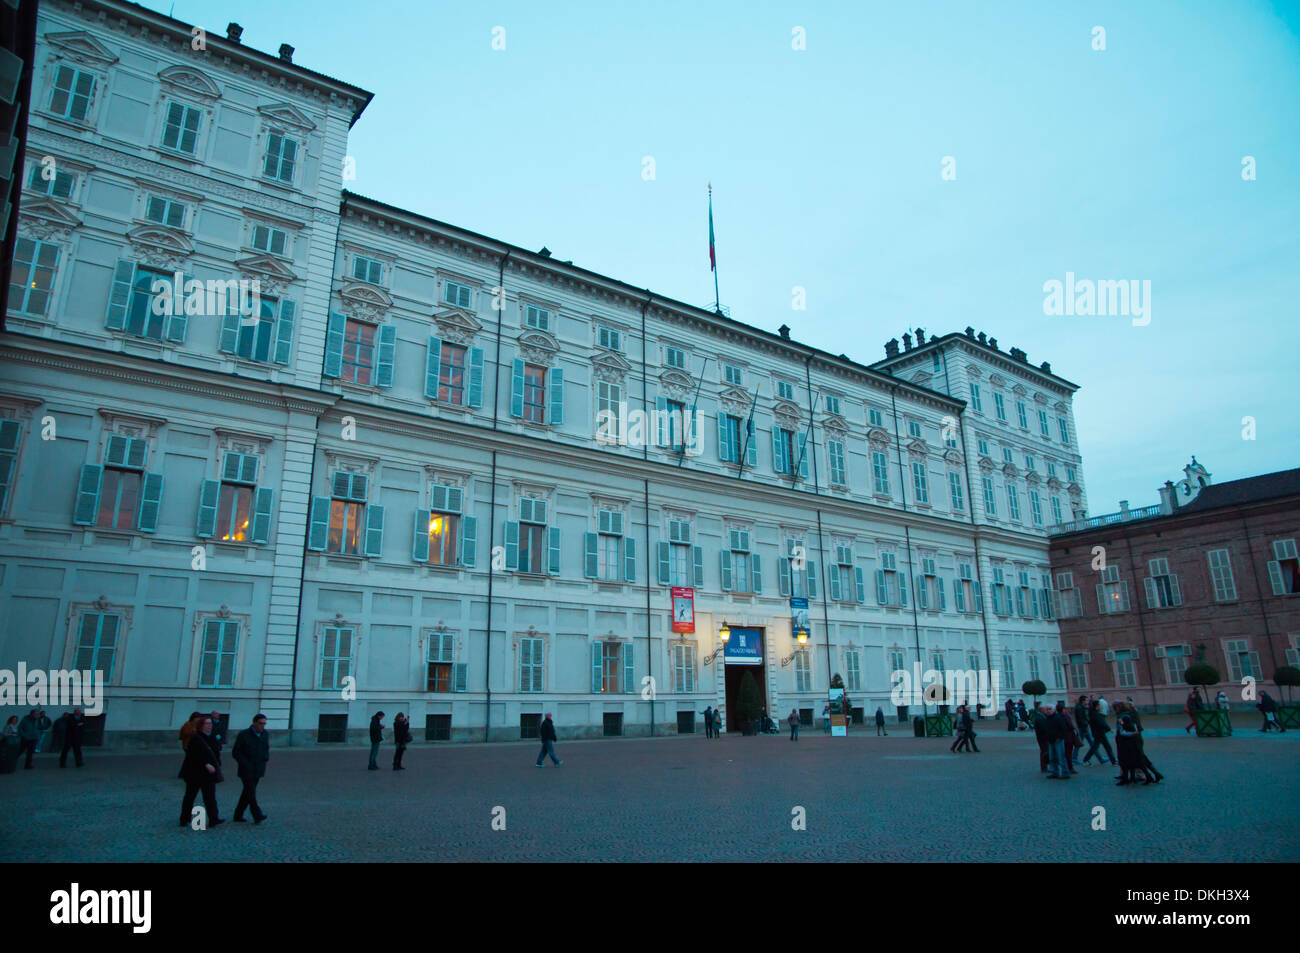 Palazzo reale, Palazzo reale, Piazza reale, Torino, Italia Foto Stock